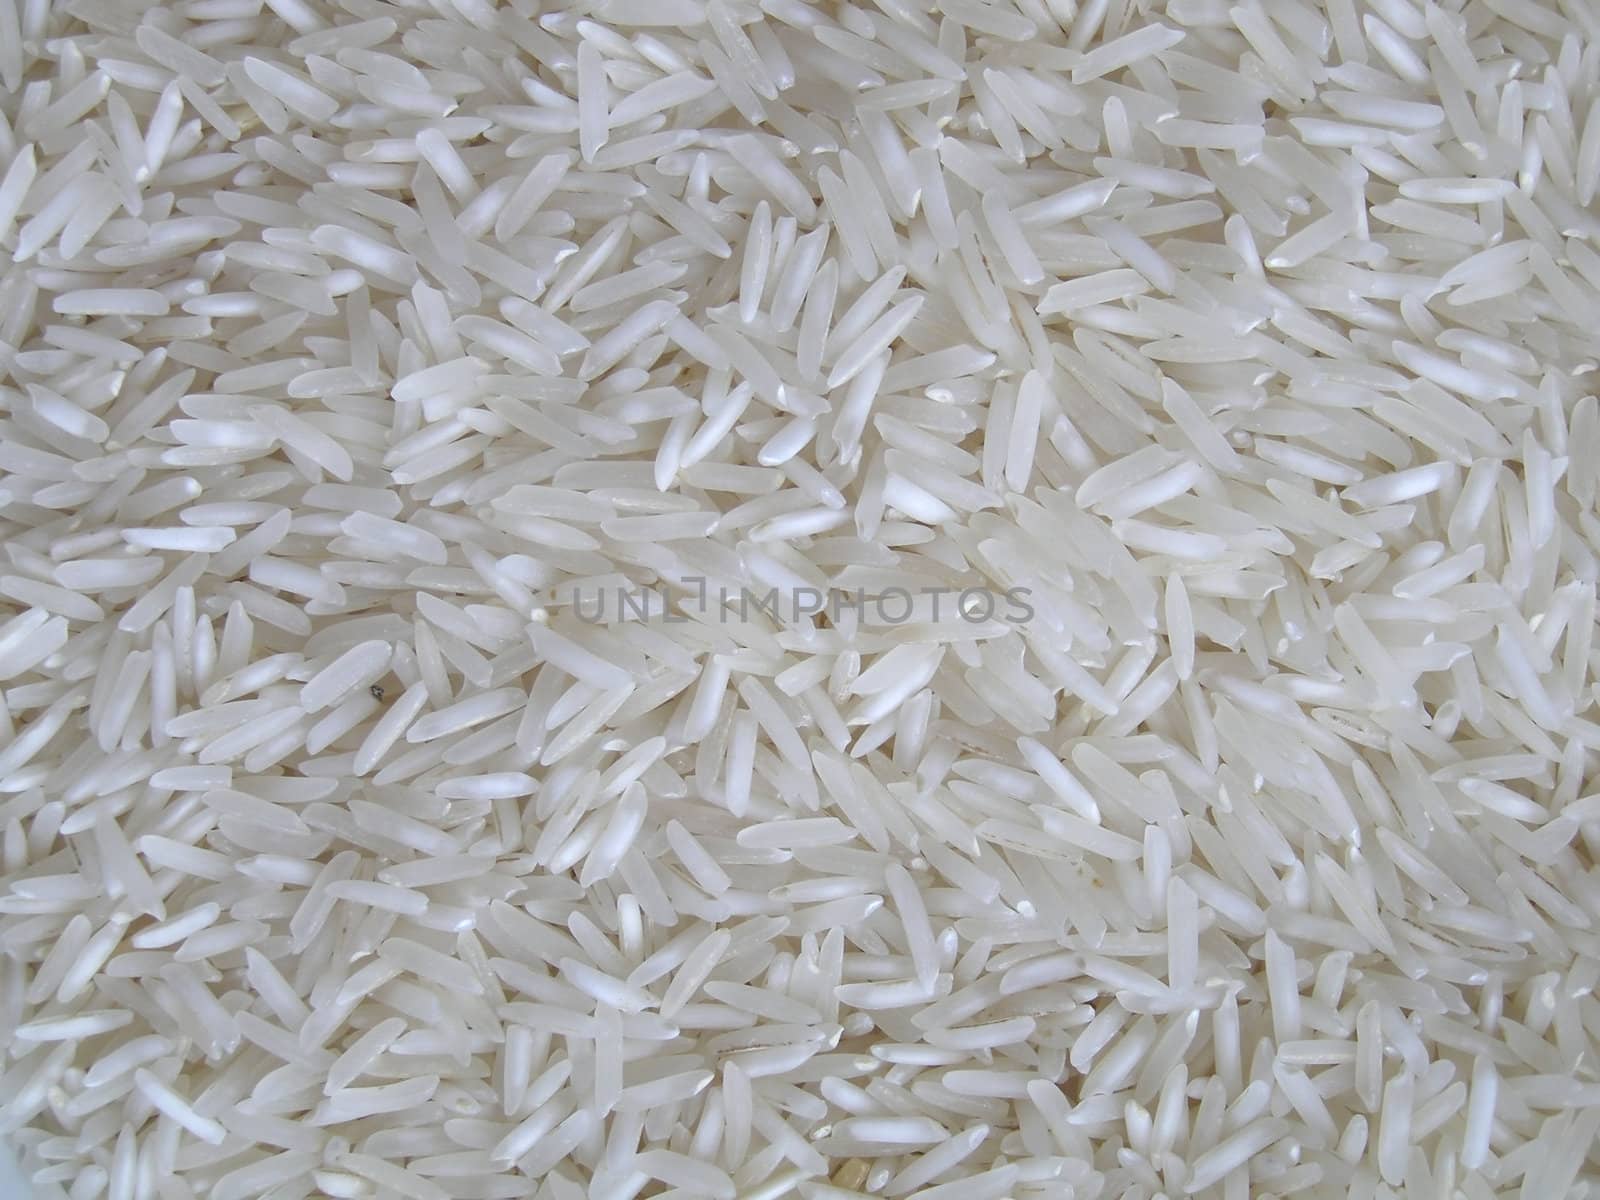 Indian Basmati rice